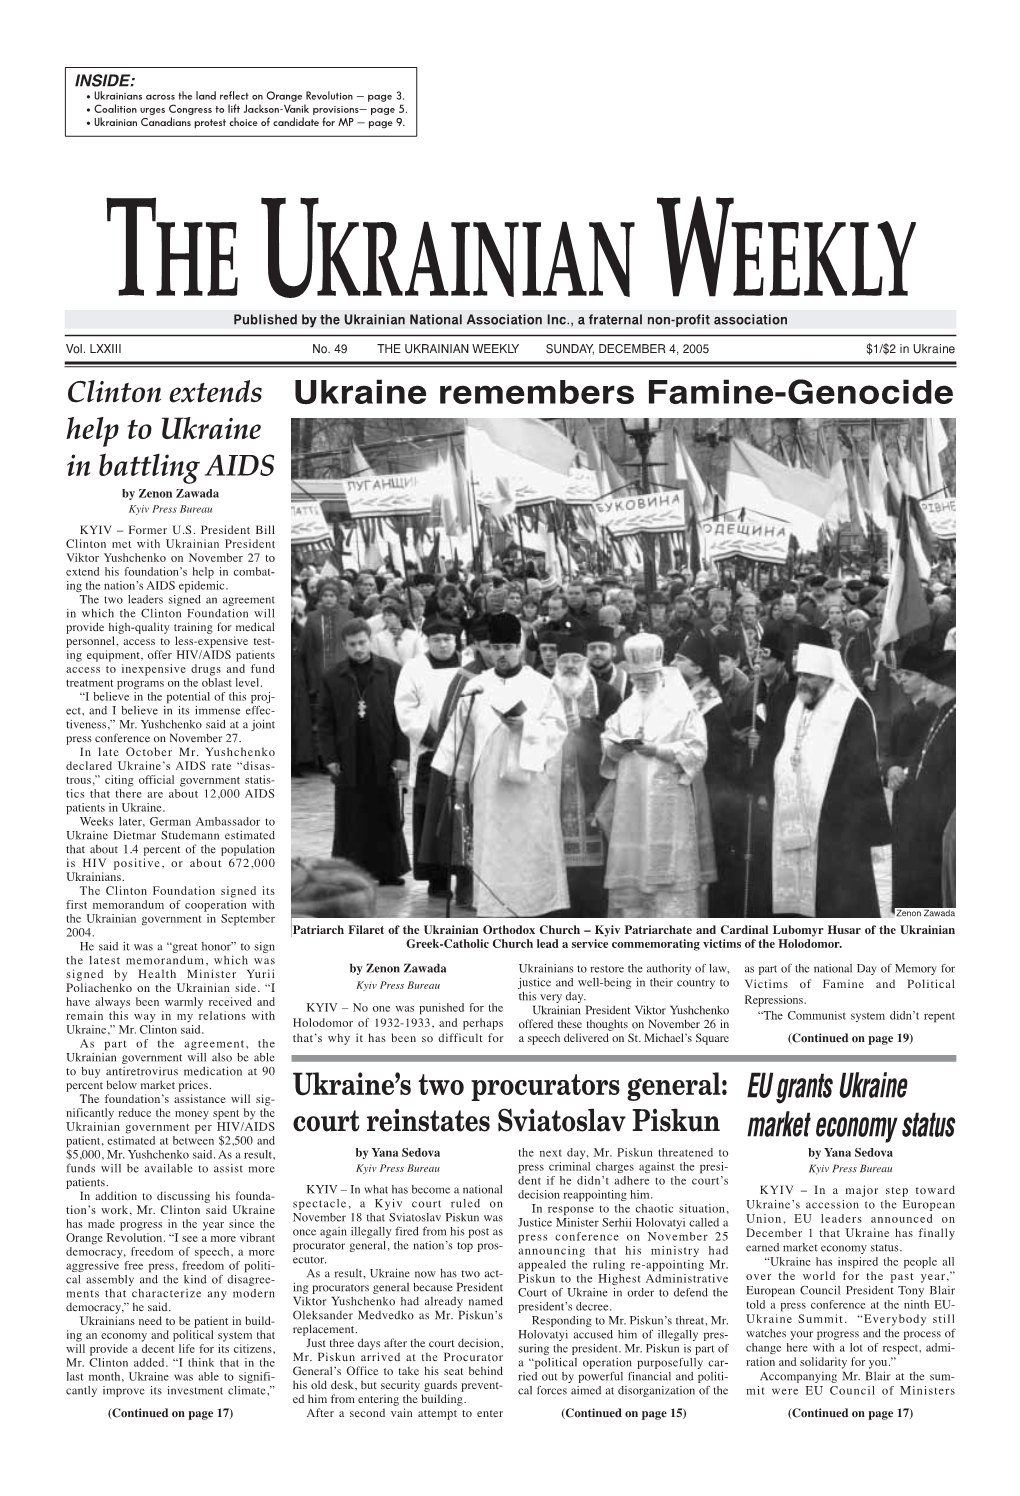 The Ukrainian Weekly 2005, No.49